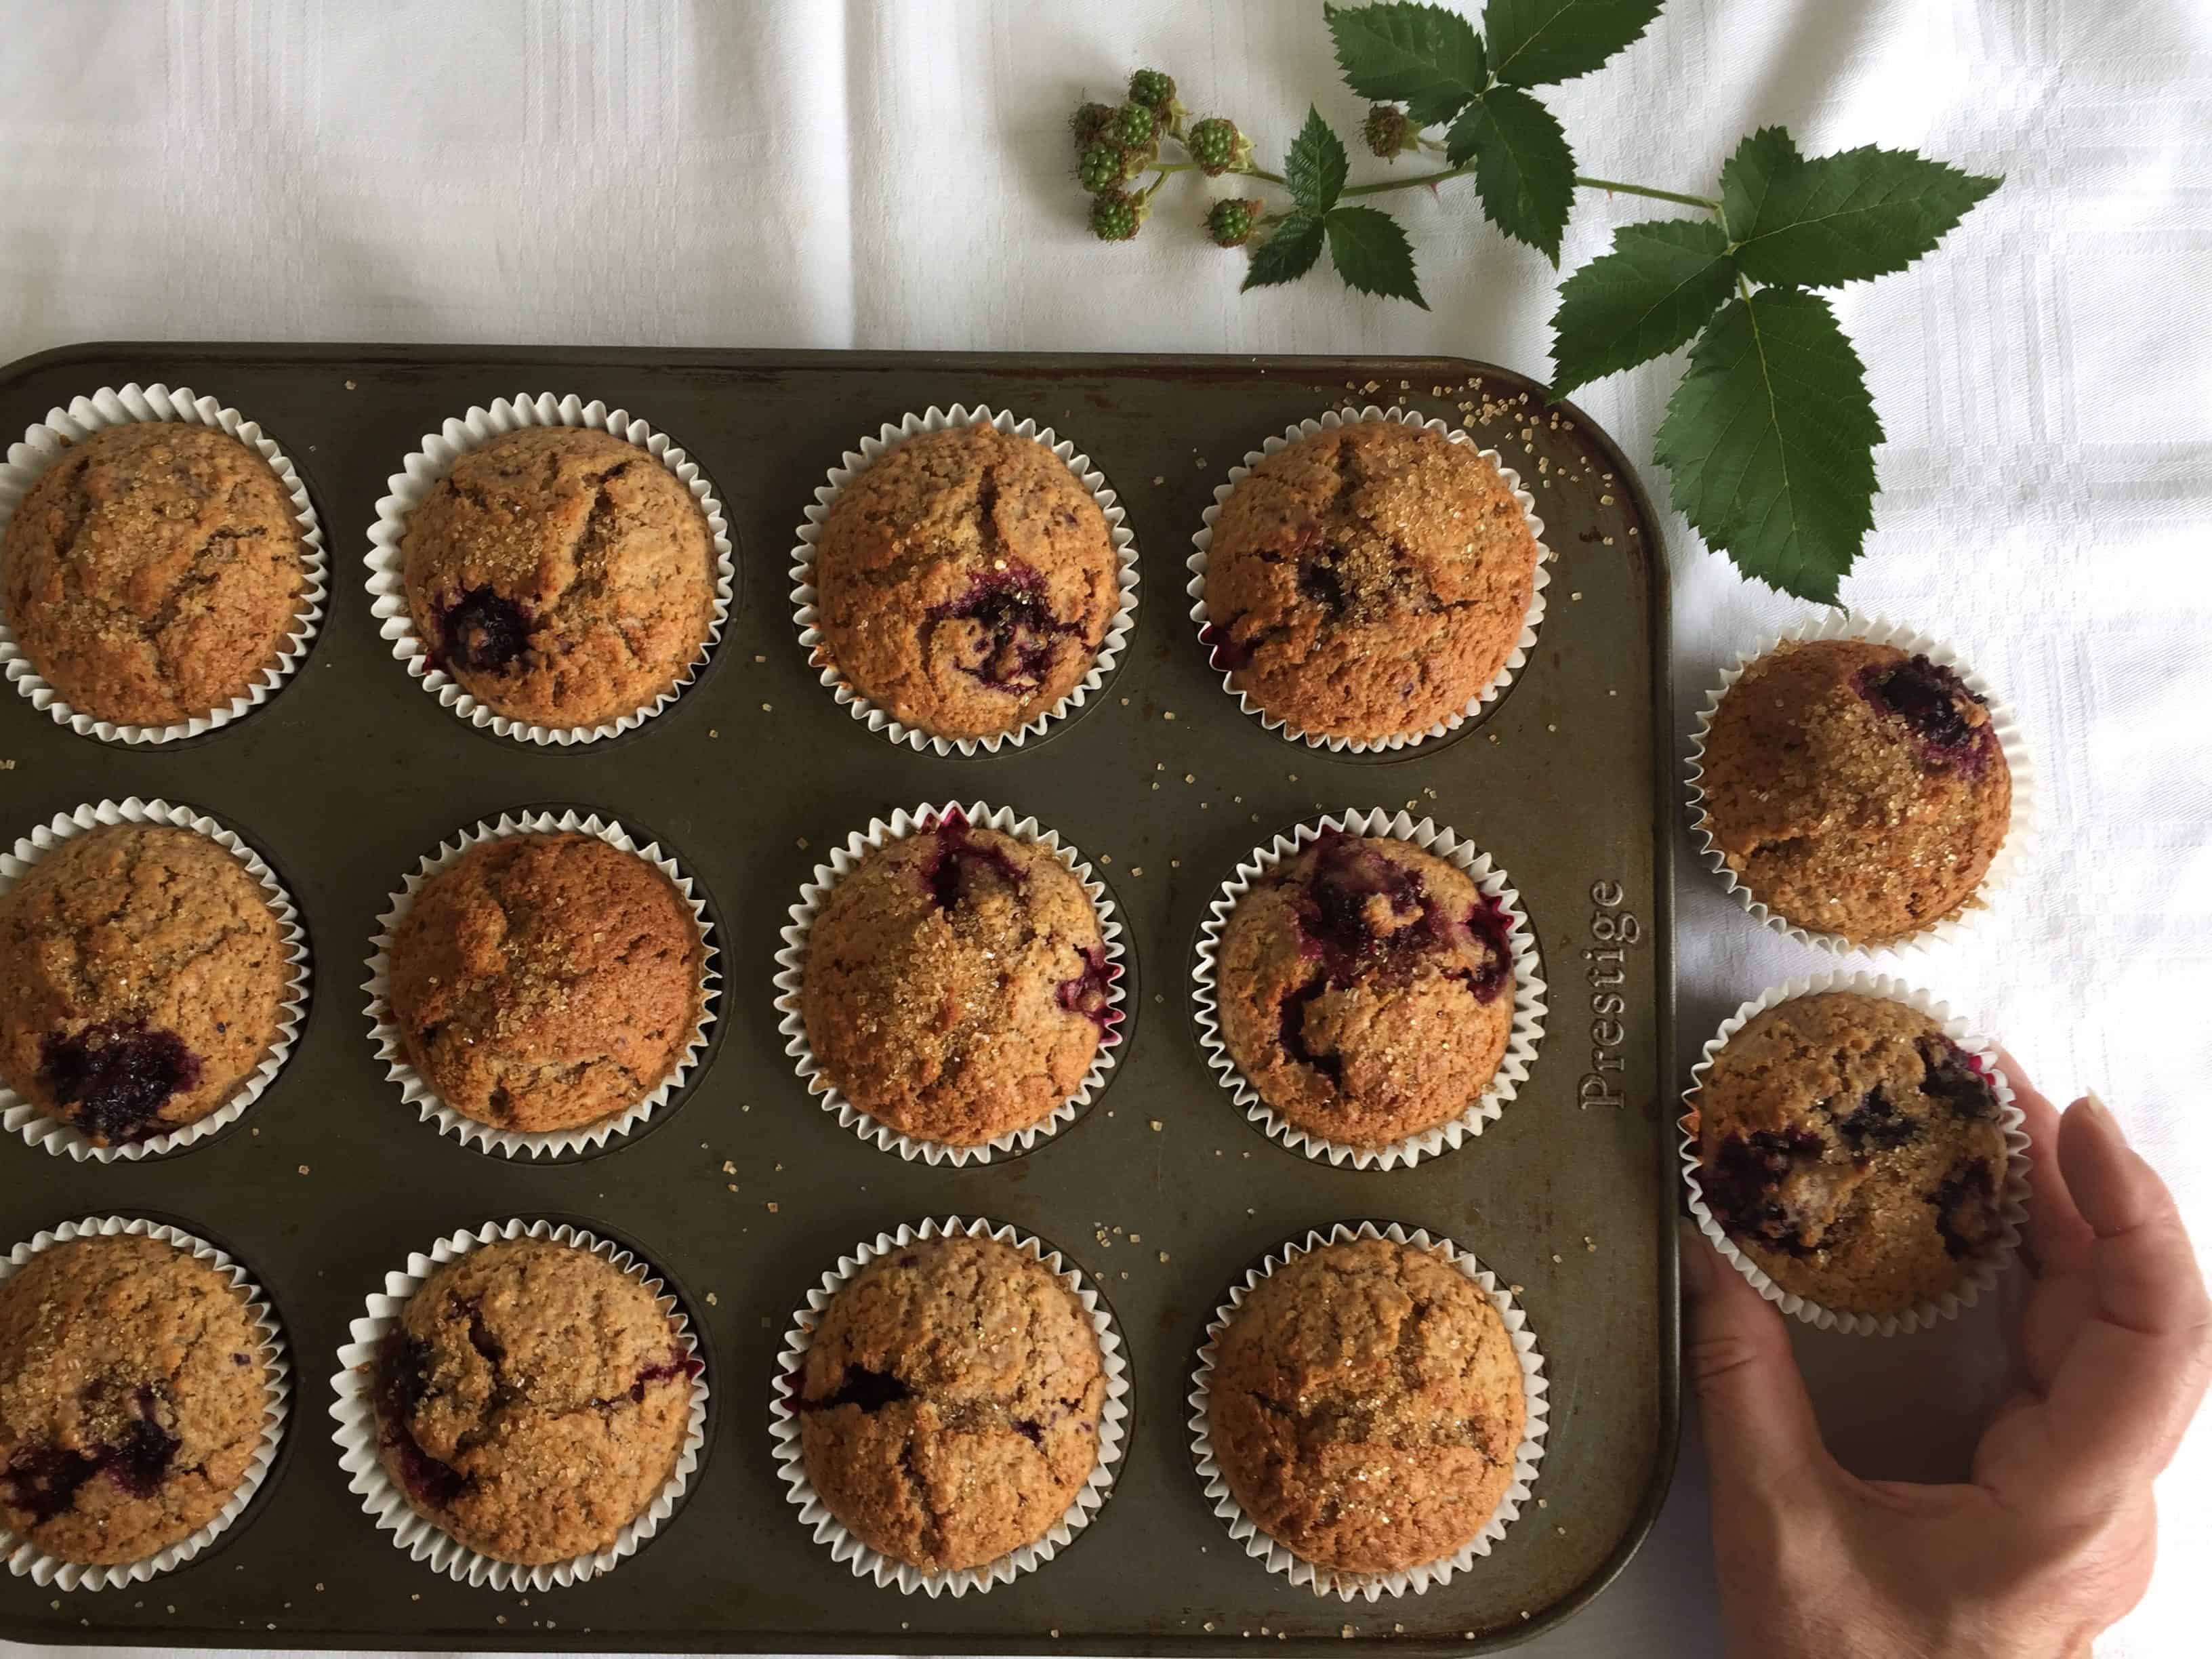 Blackberry and Oat muffins using Spelt flour.